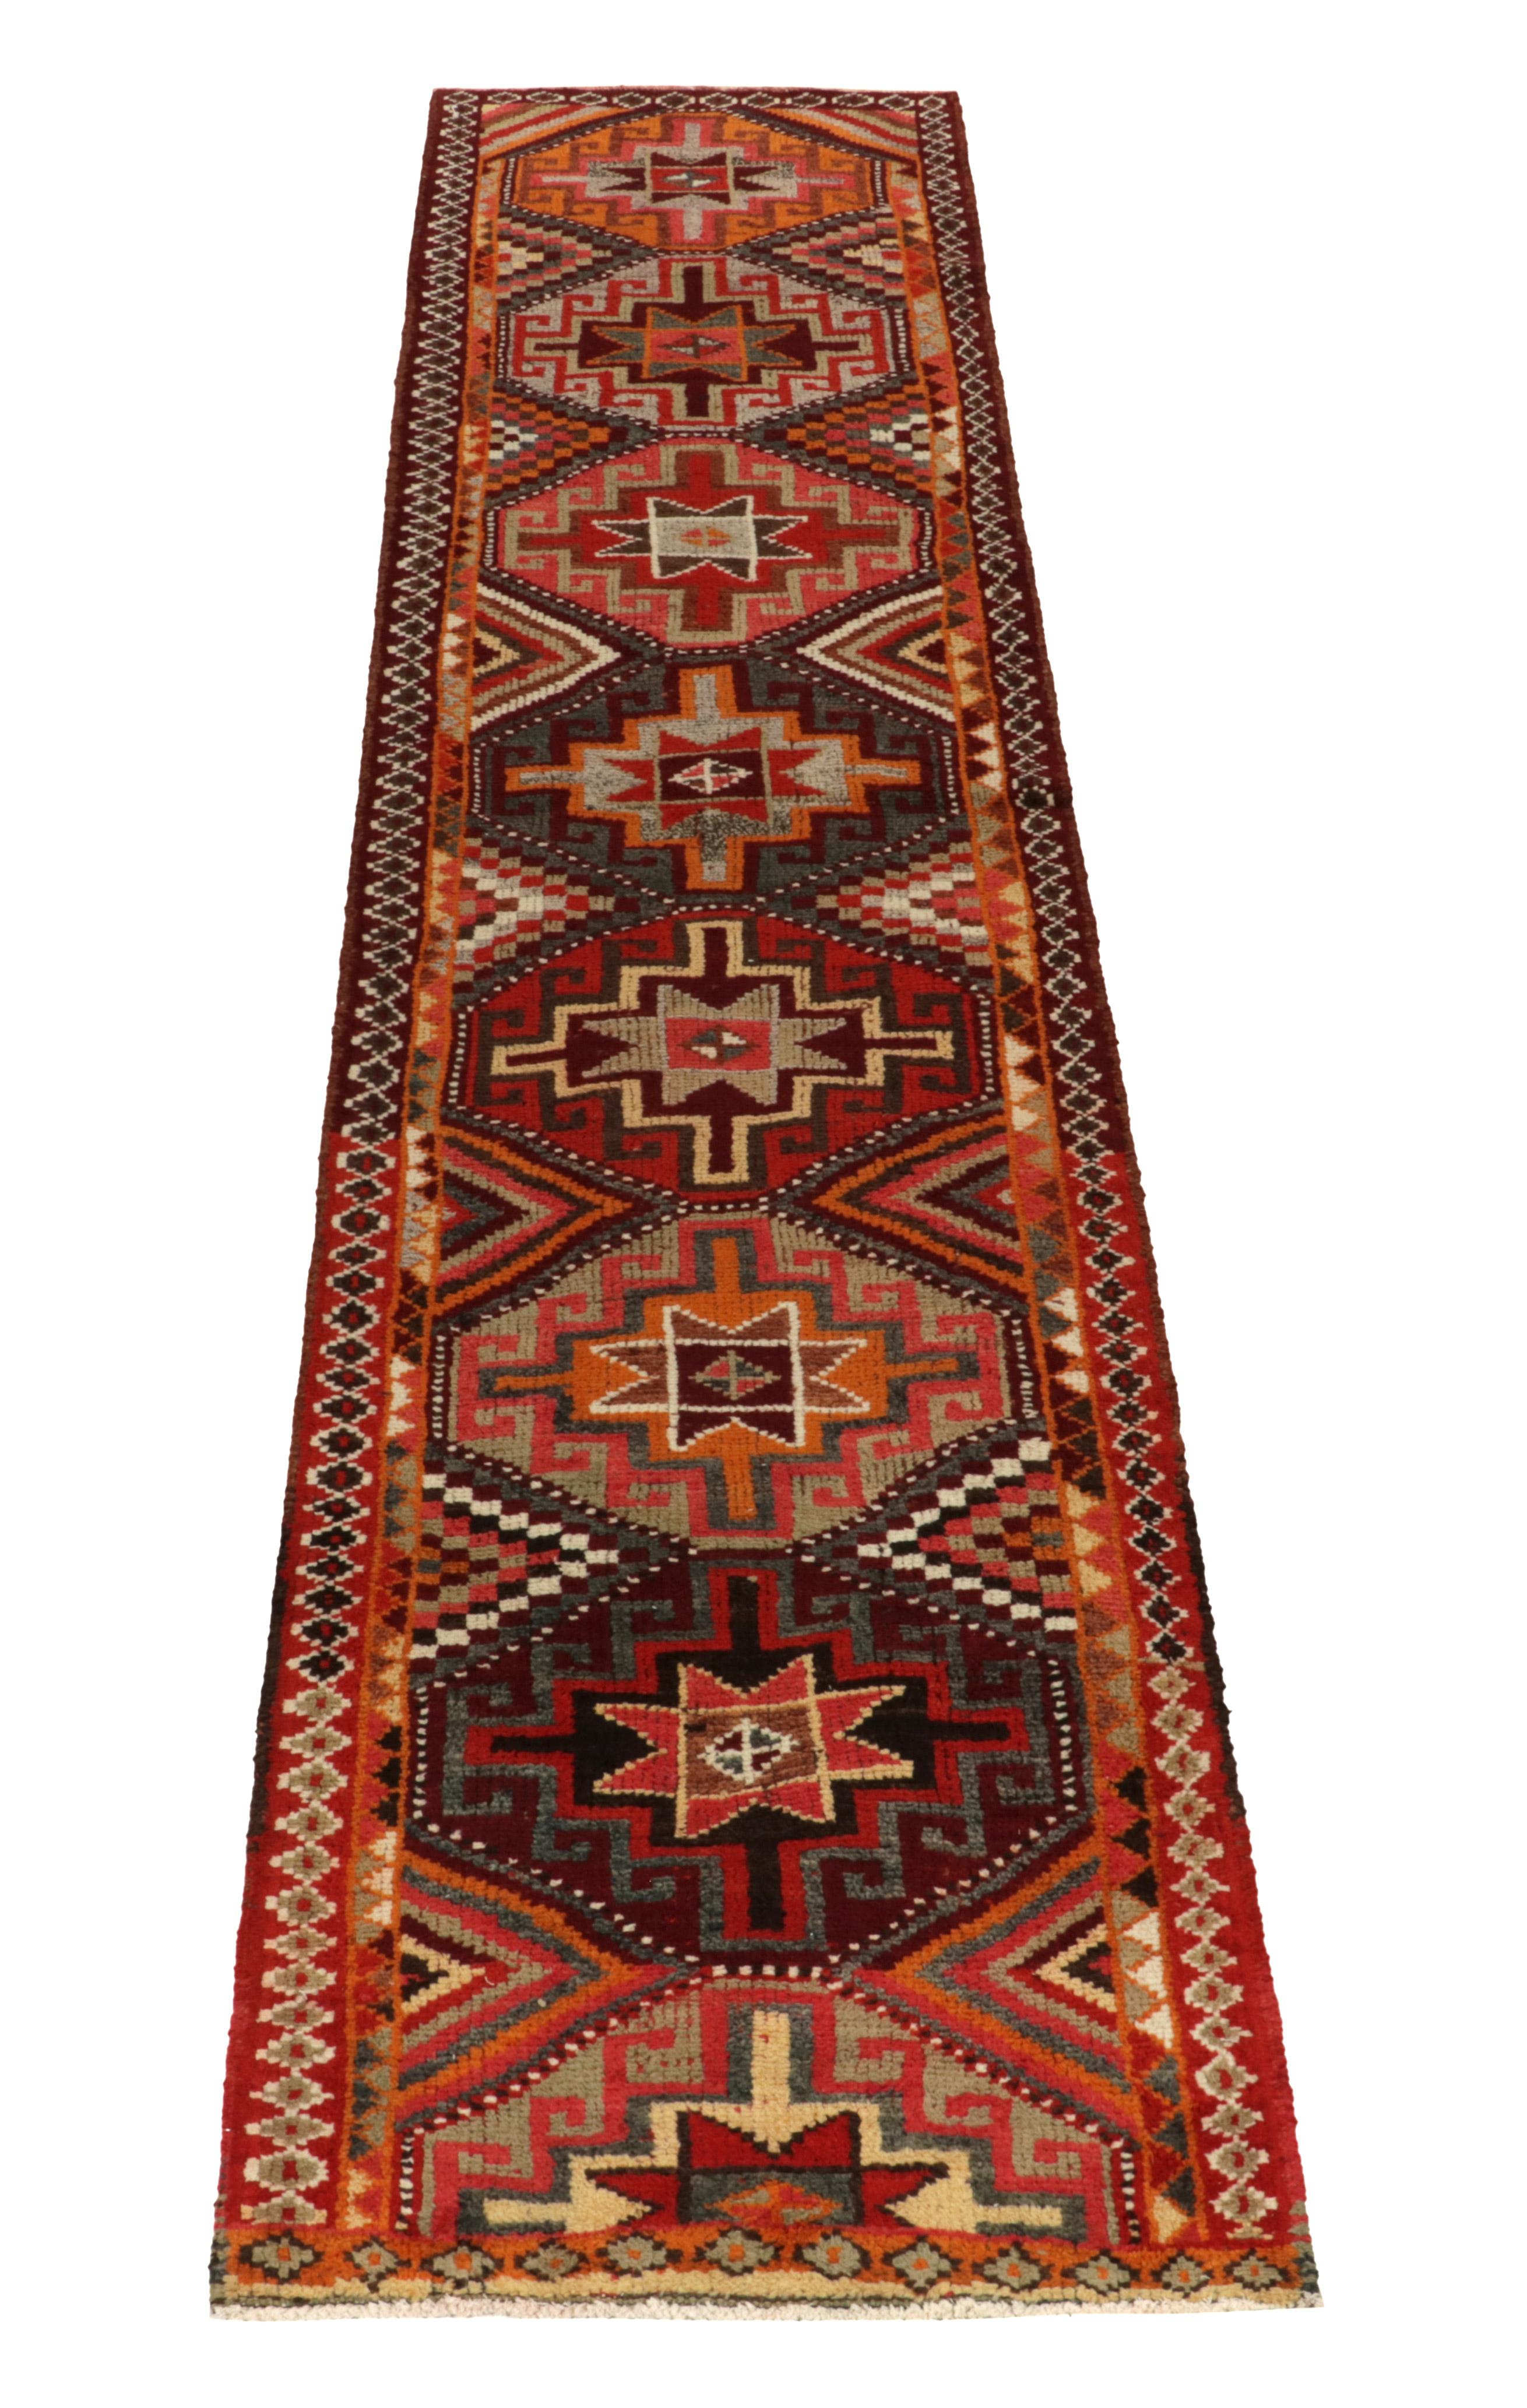 Turkish 1950s Vintage Tribal Runner in Red, Orange Geometric Patterns by Rug & Kilim For Sale